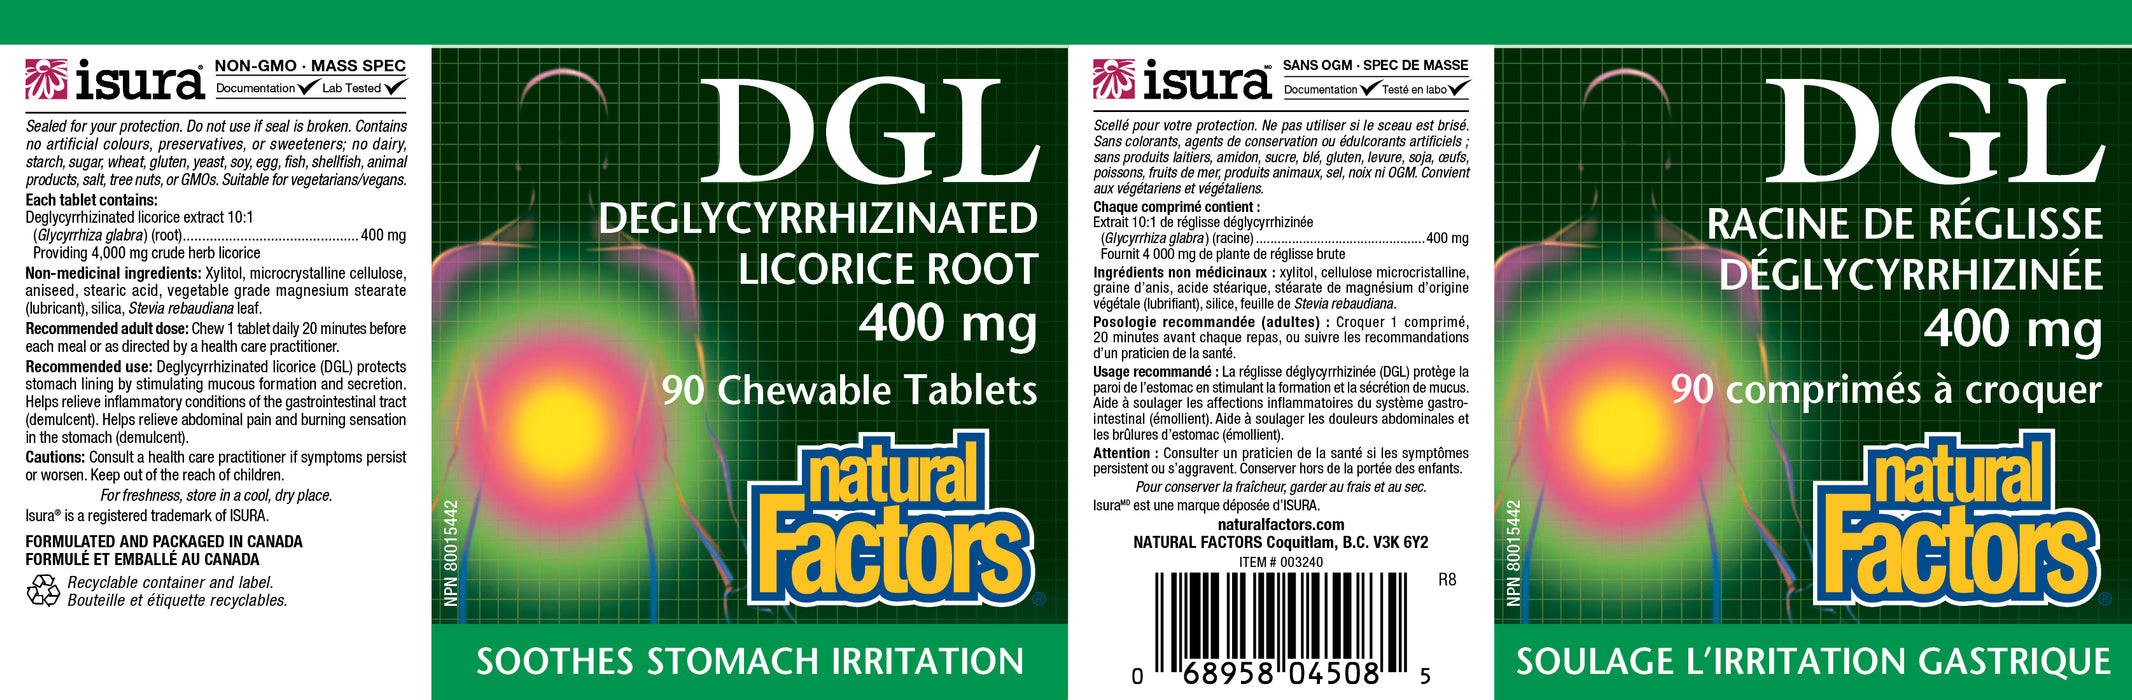 Natural Factors DGL 400mg - Deglyrrhizinated Licore Root 90 Chewable Tablets